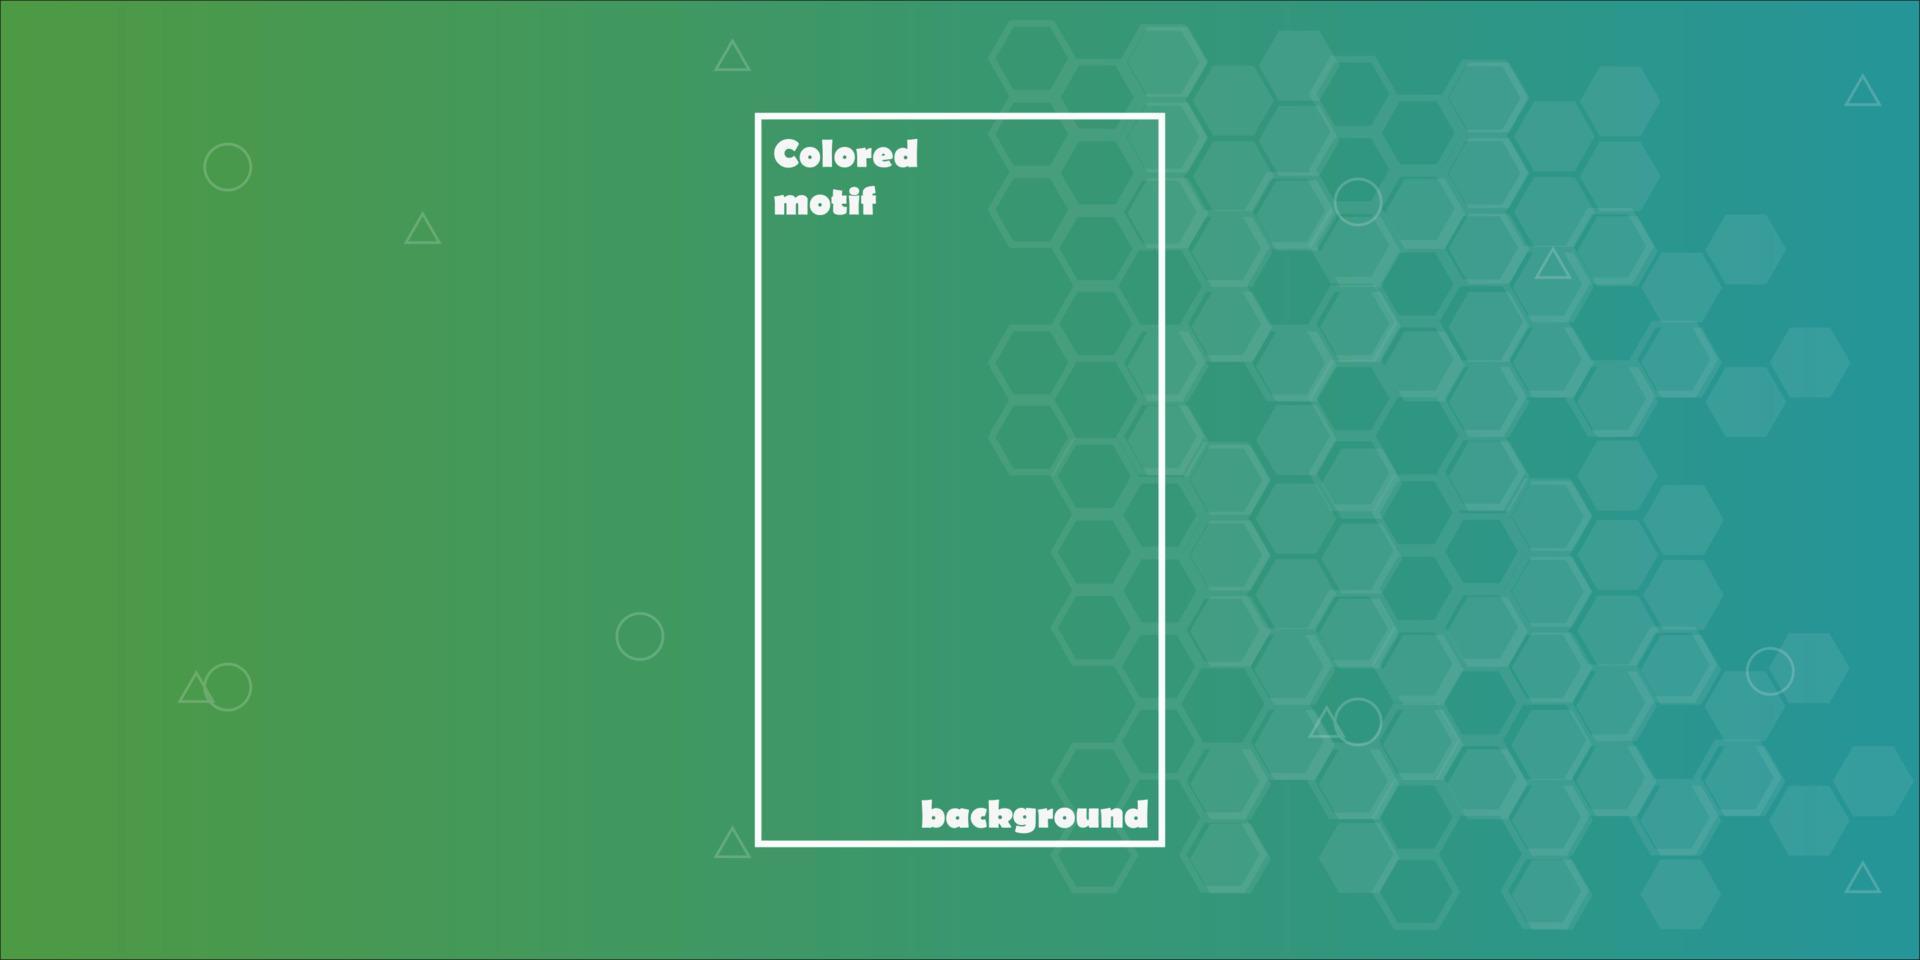 conjunto de fondos abstractos horizontales con un patrón rectangular en colores degradados verdes. colección de texturas degradadas con adornos geométricos. volante, pancarta, portada, afiche o diseño web. vector